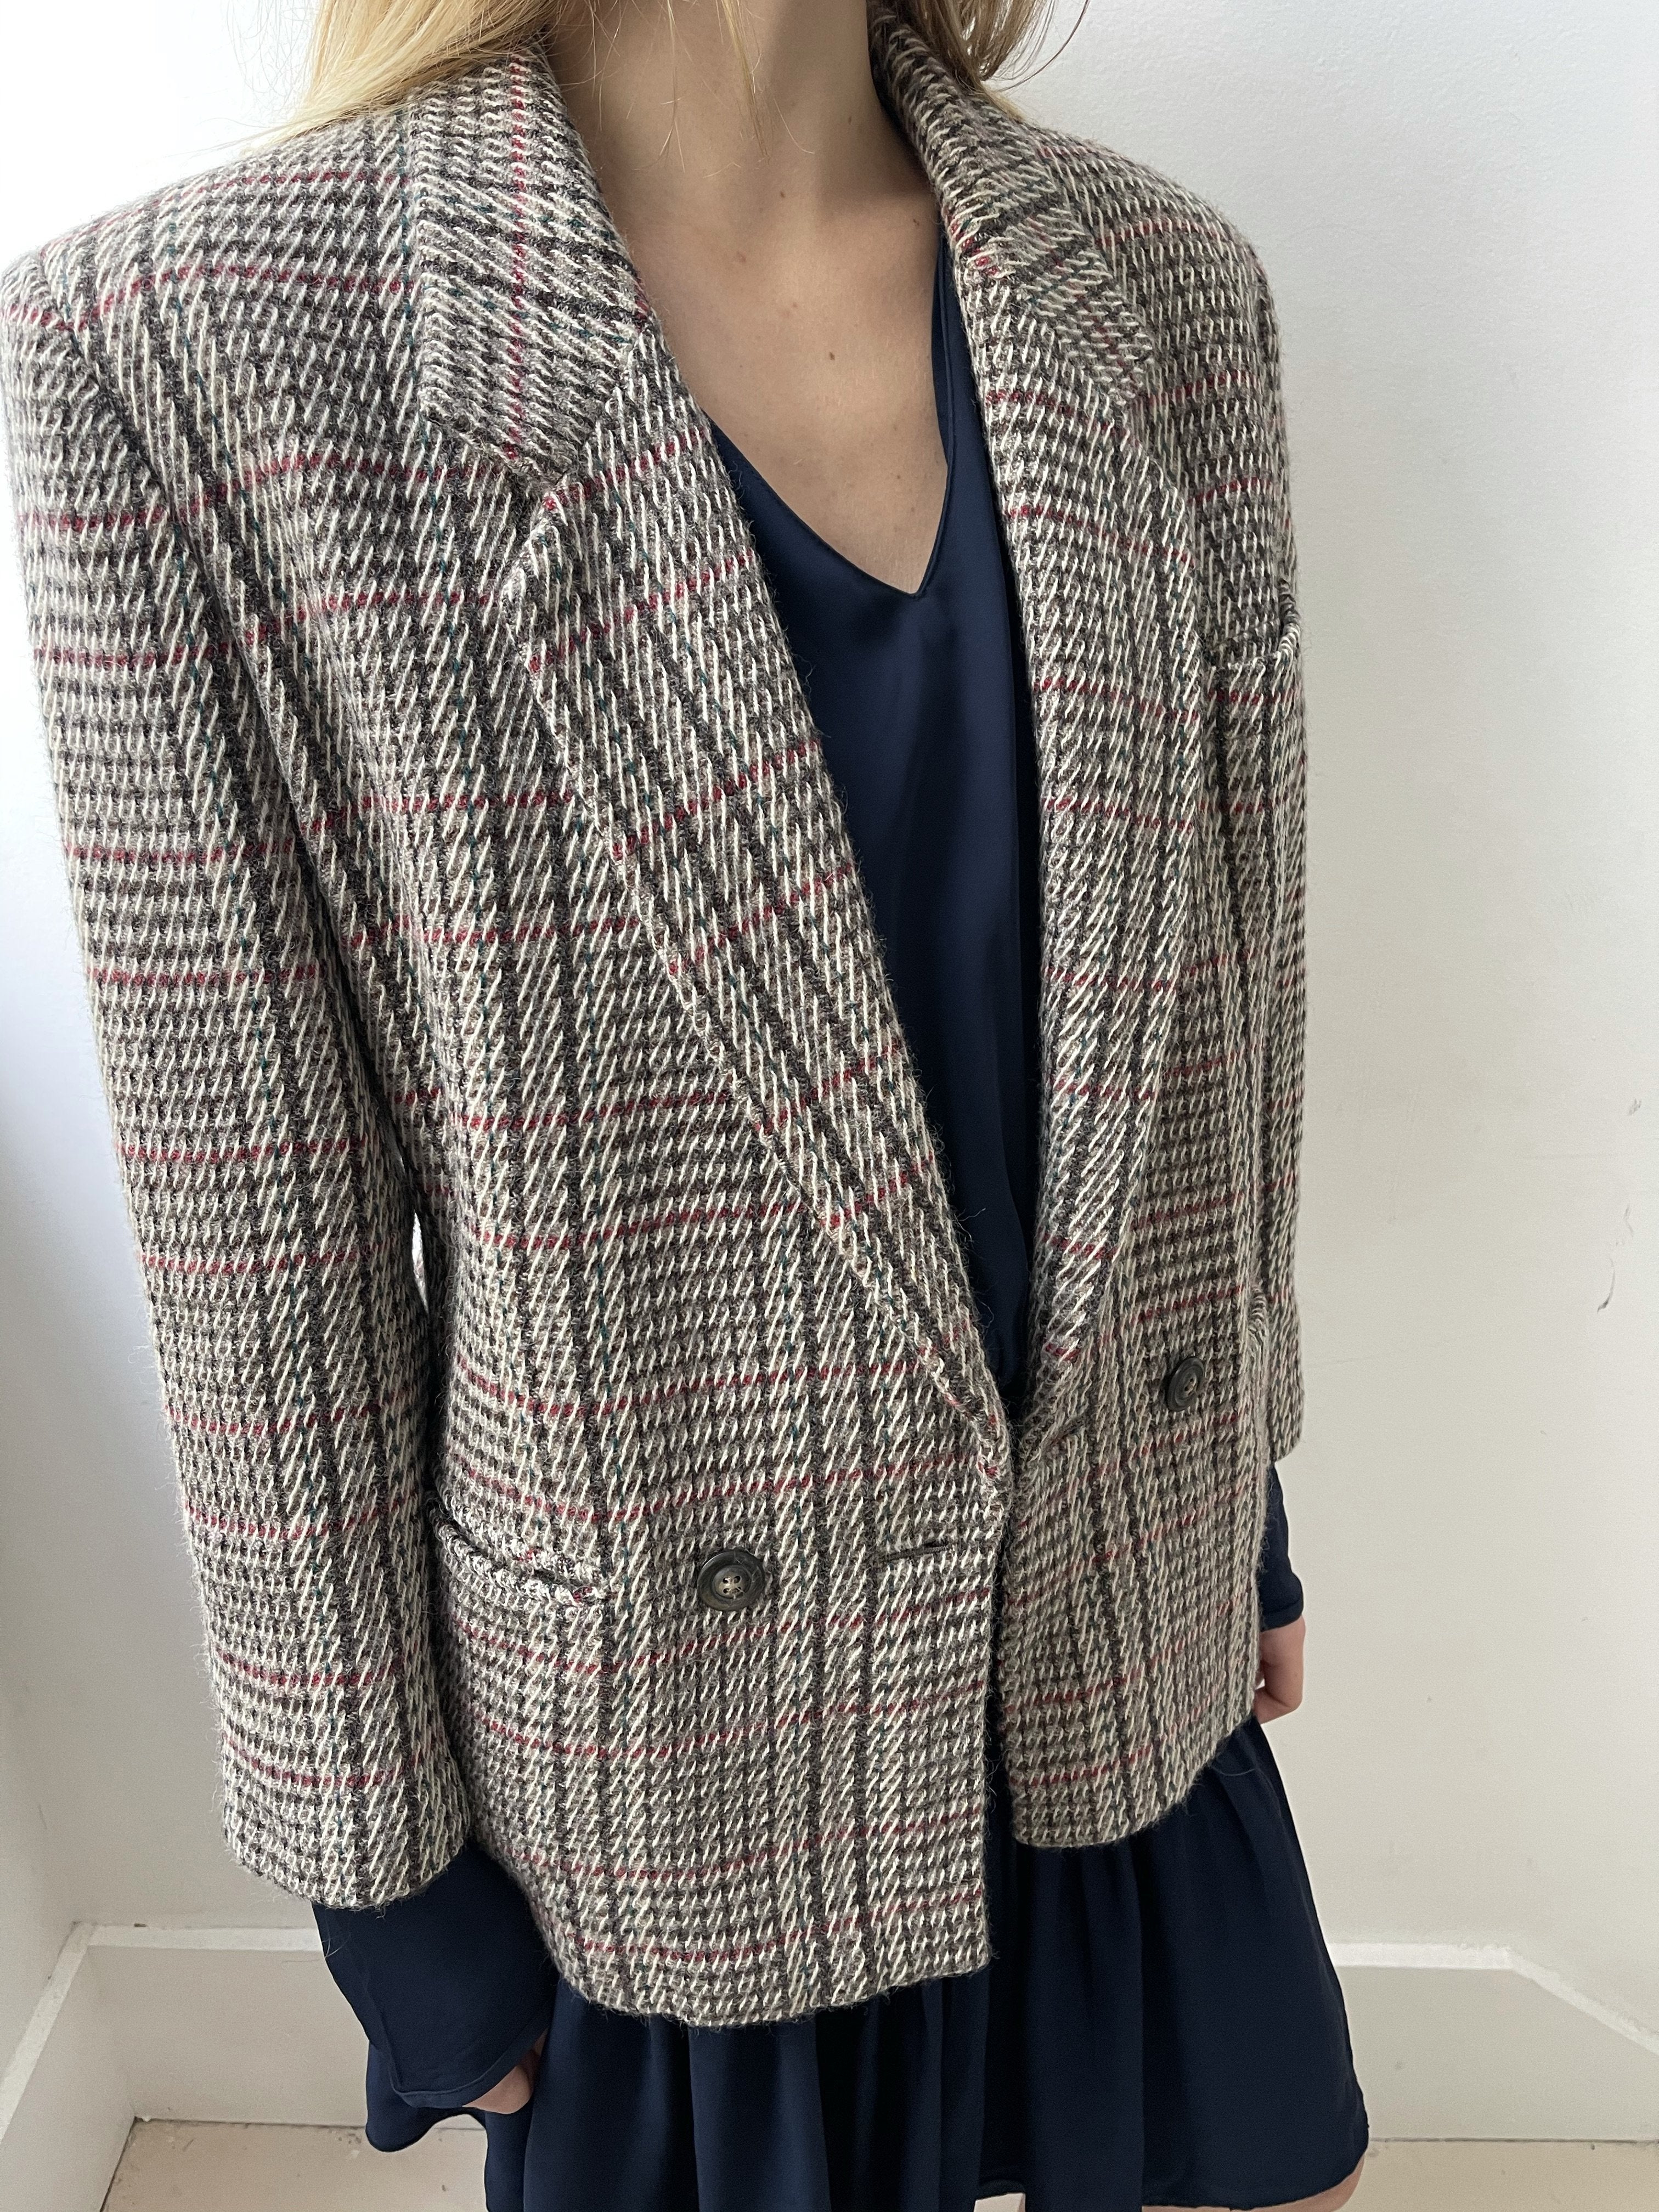 NobleGolit Jackets Medium Checked Tweed Blazer